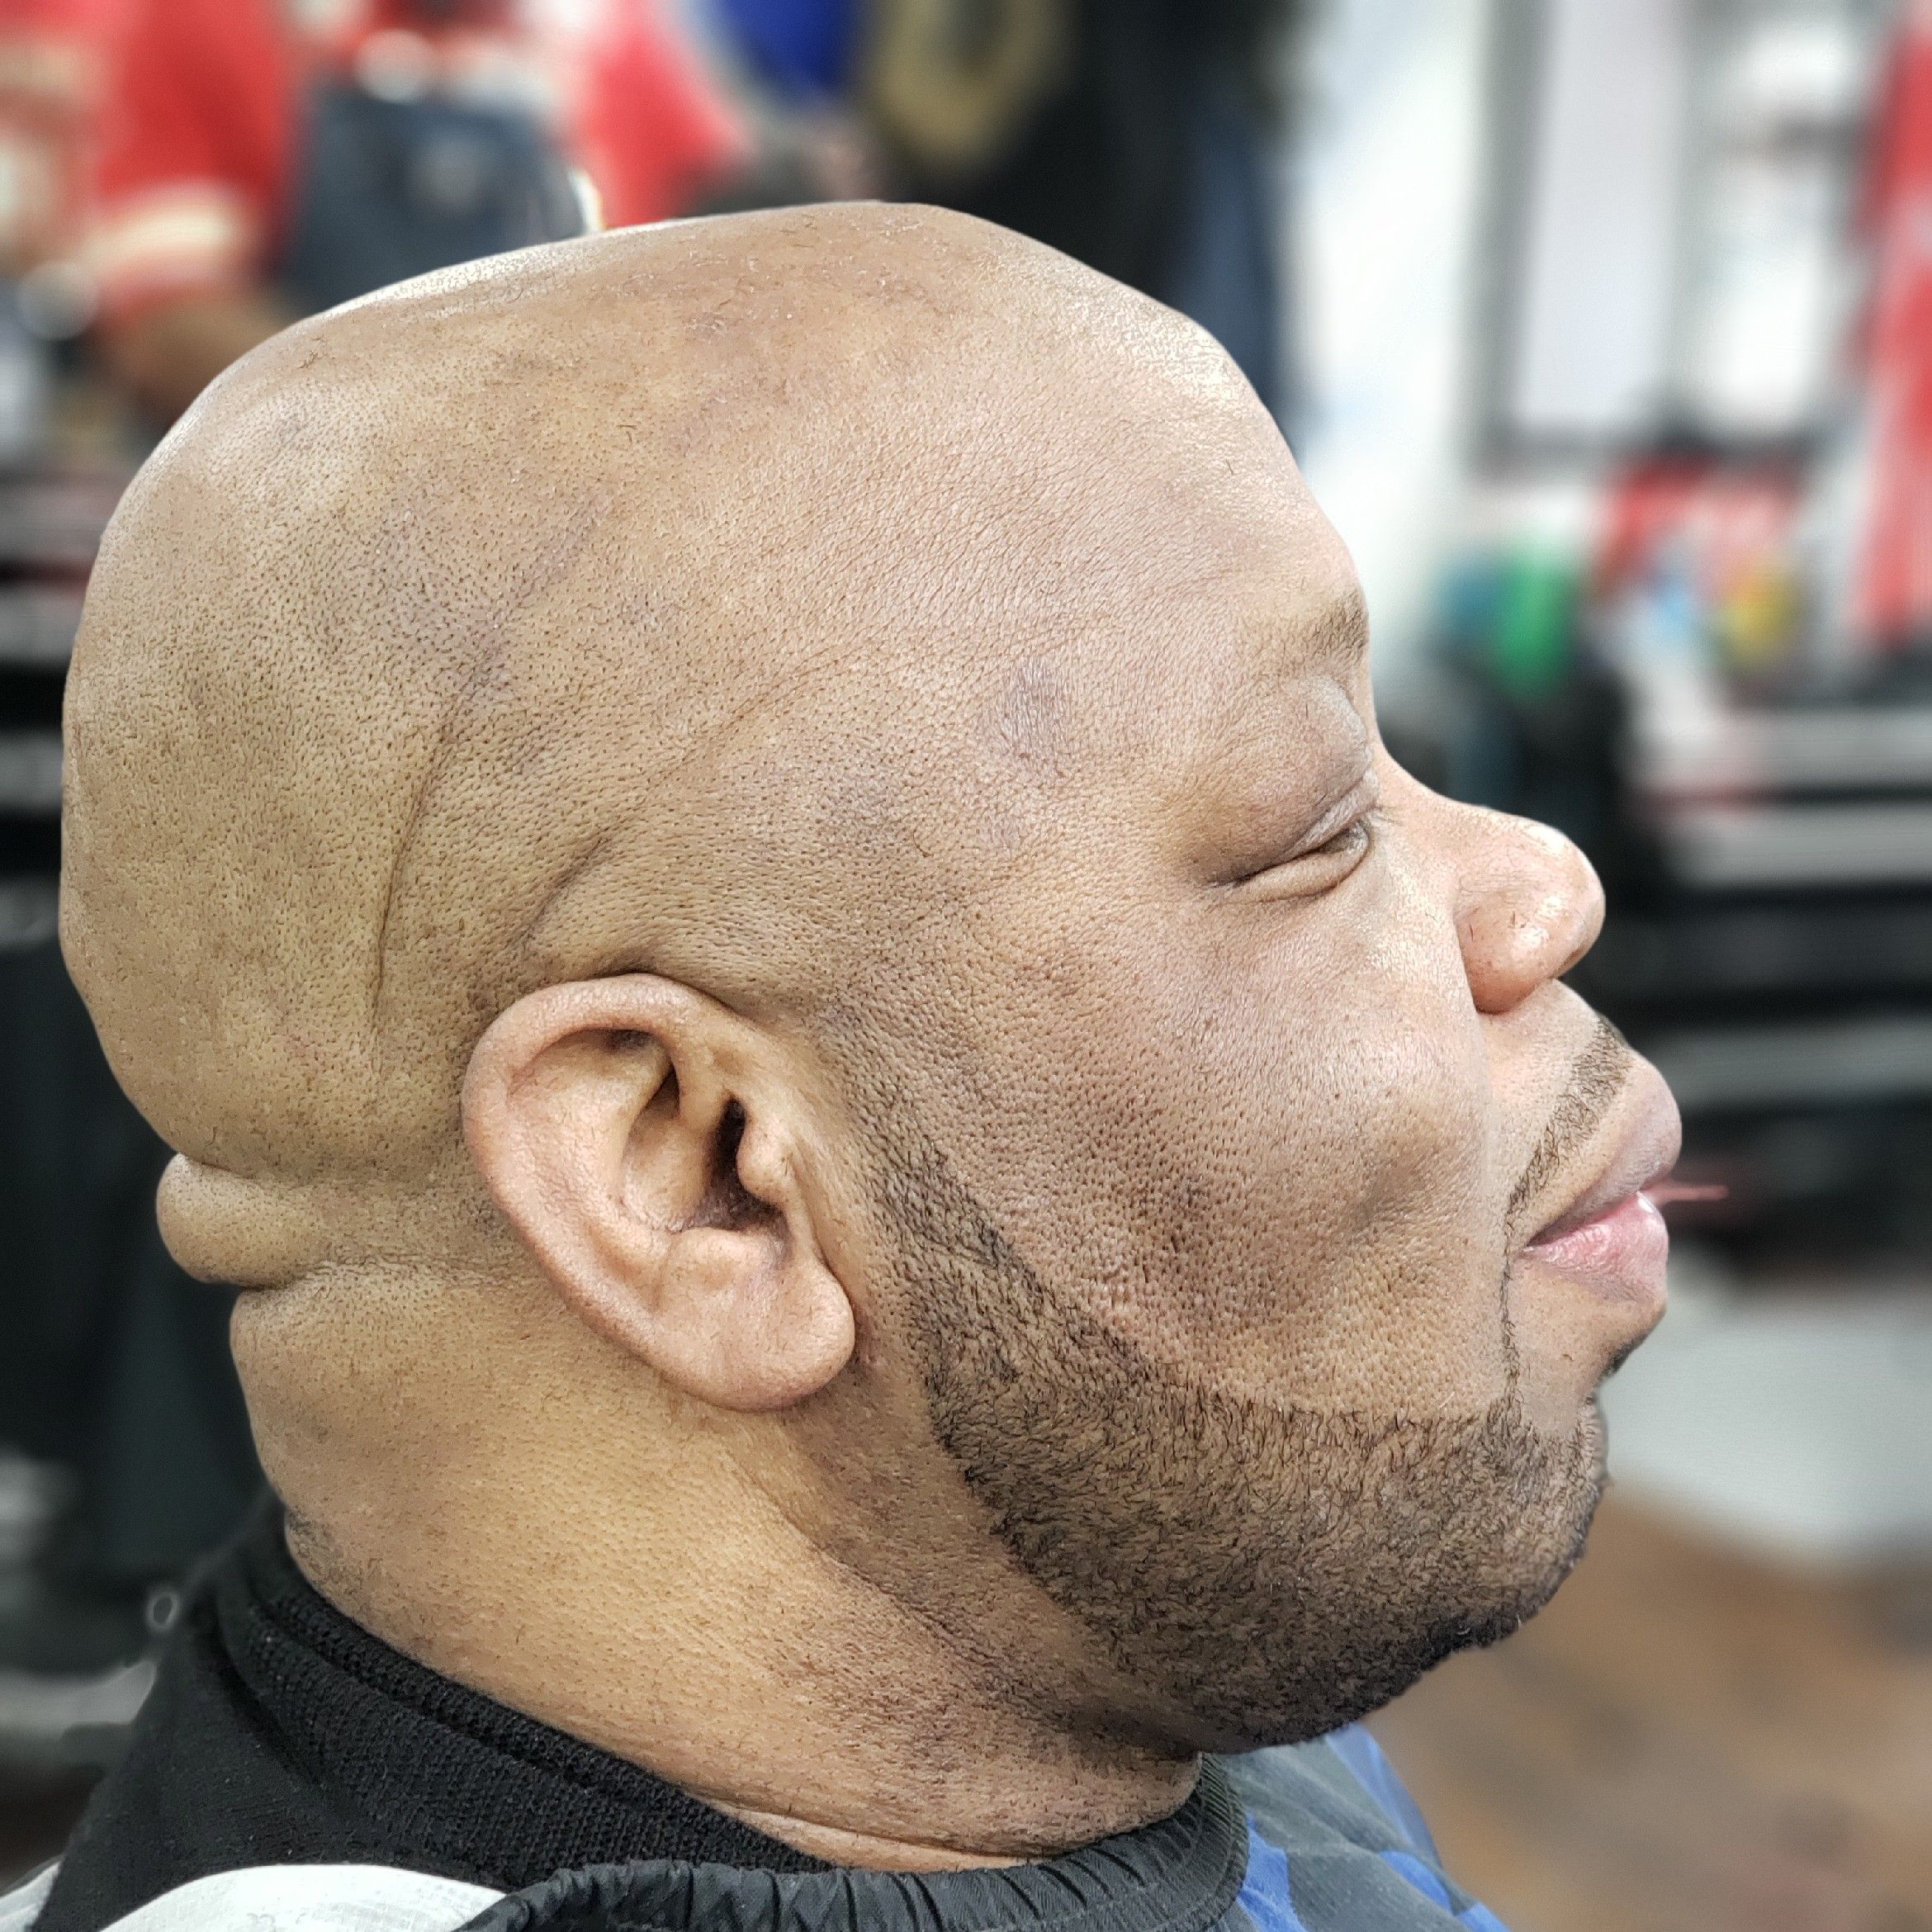 Bald Head And Shave portfolio